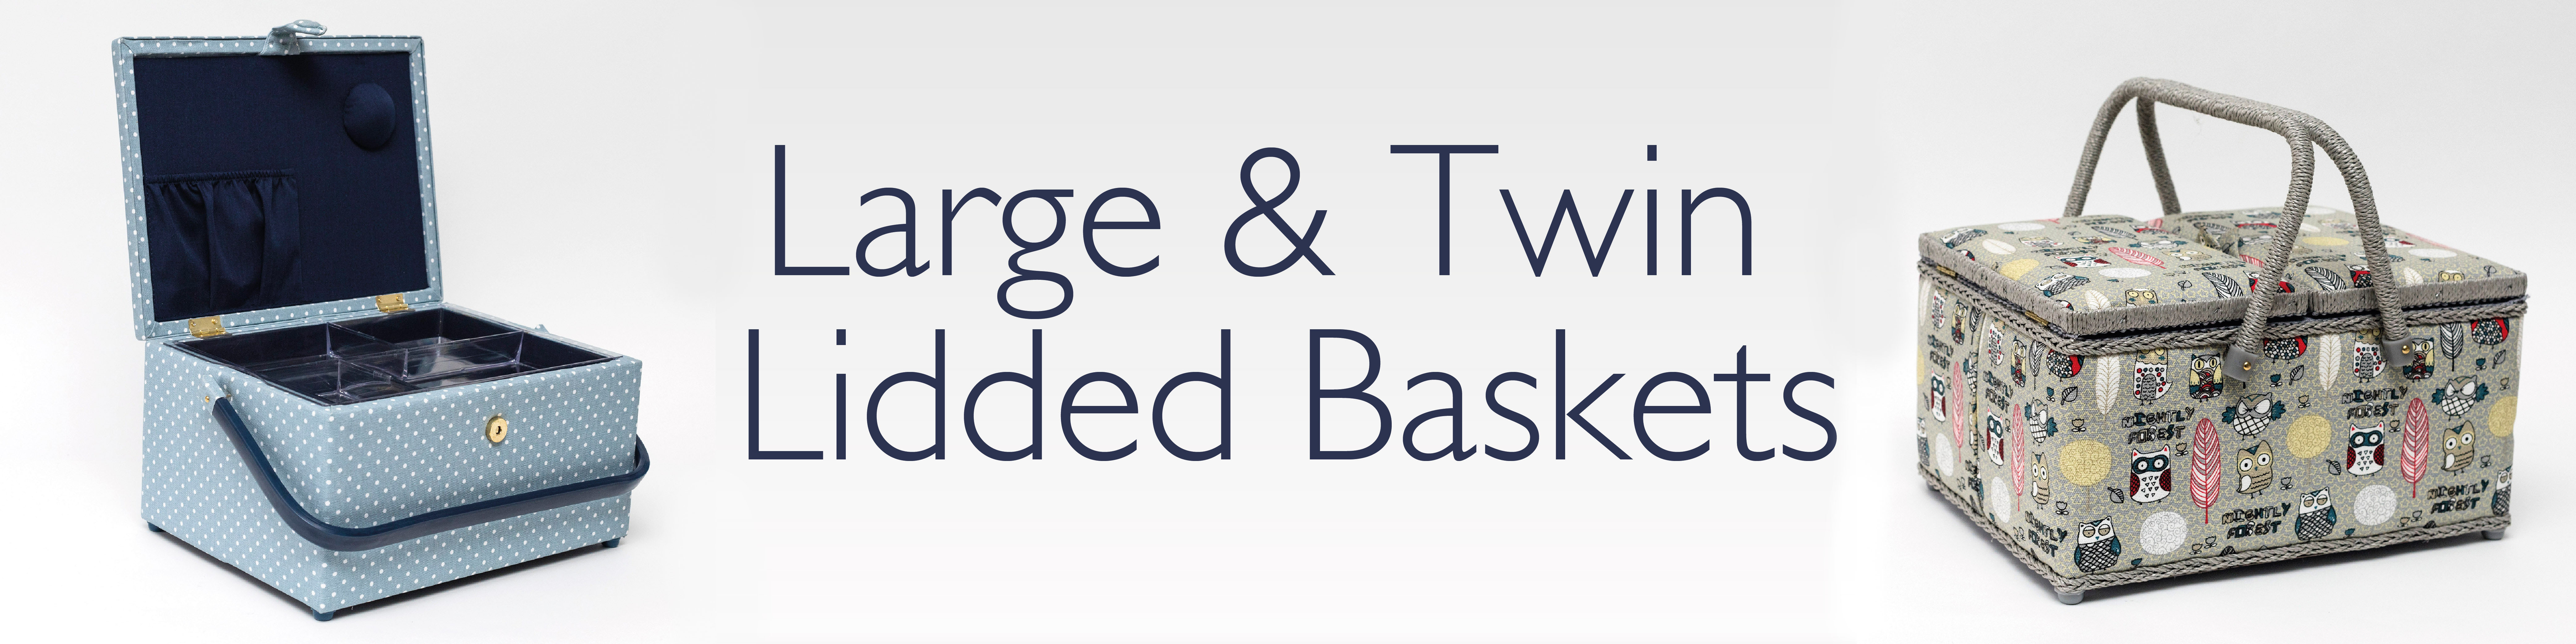 Large & Twin Lidded Baskets